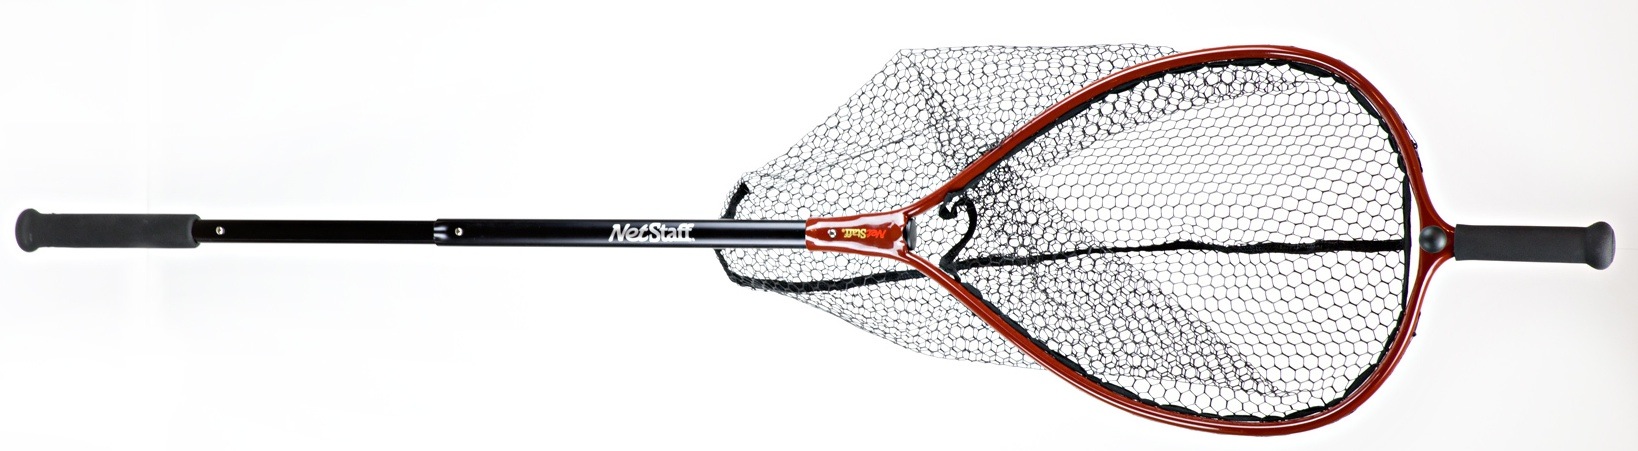 NetStaff Product Video – 3 Reasons I Love This Fly Fishing Net